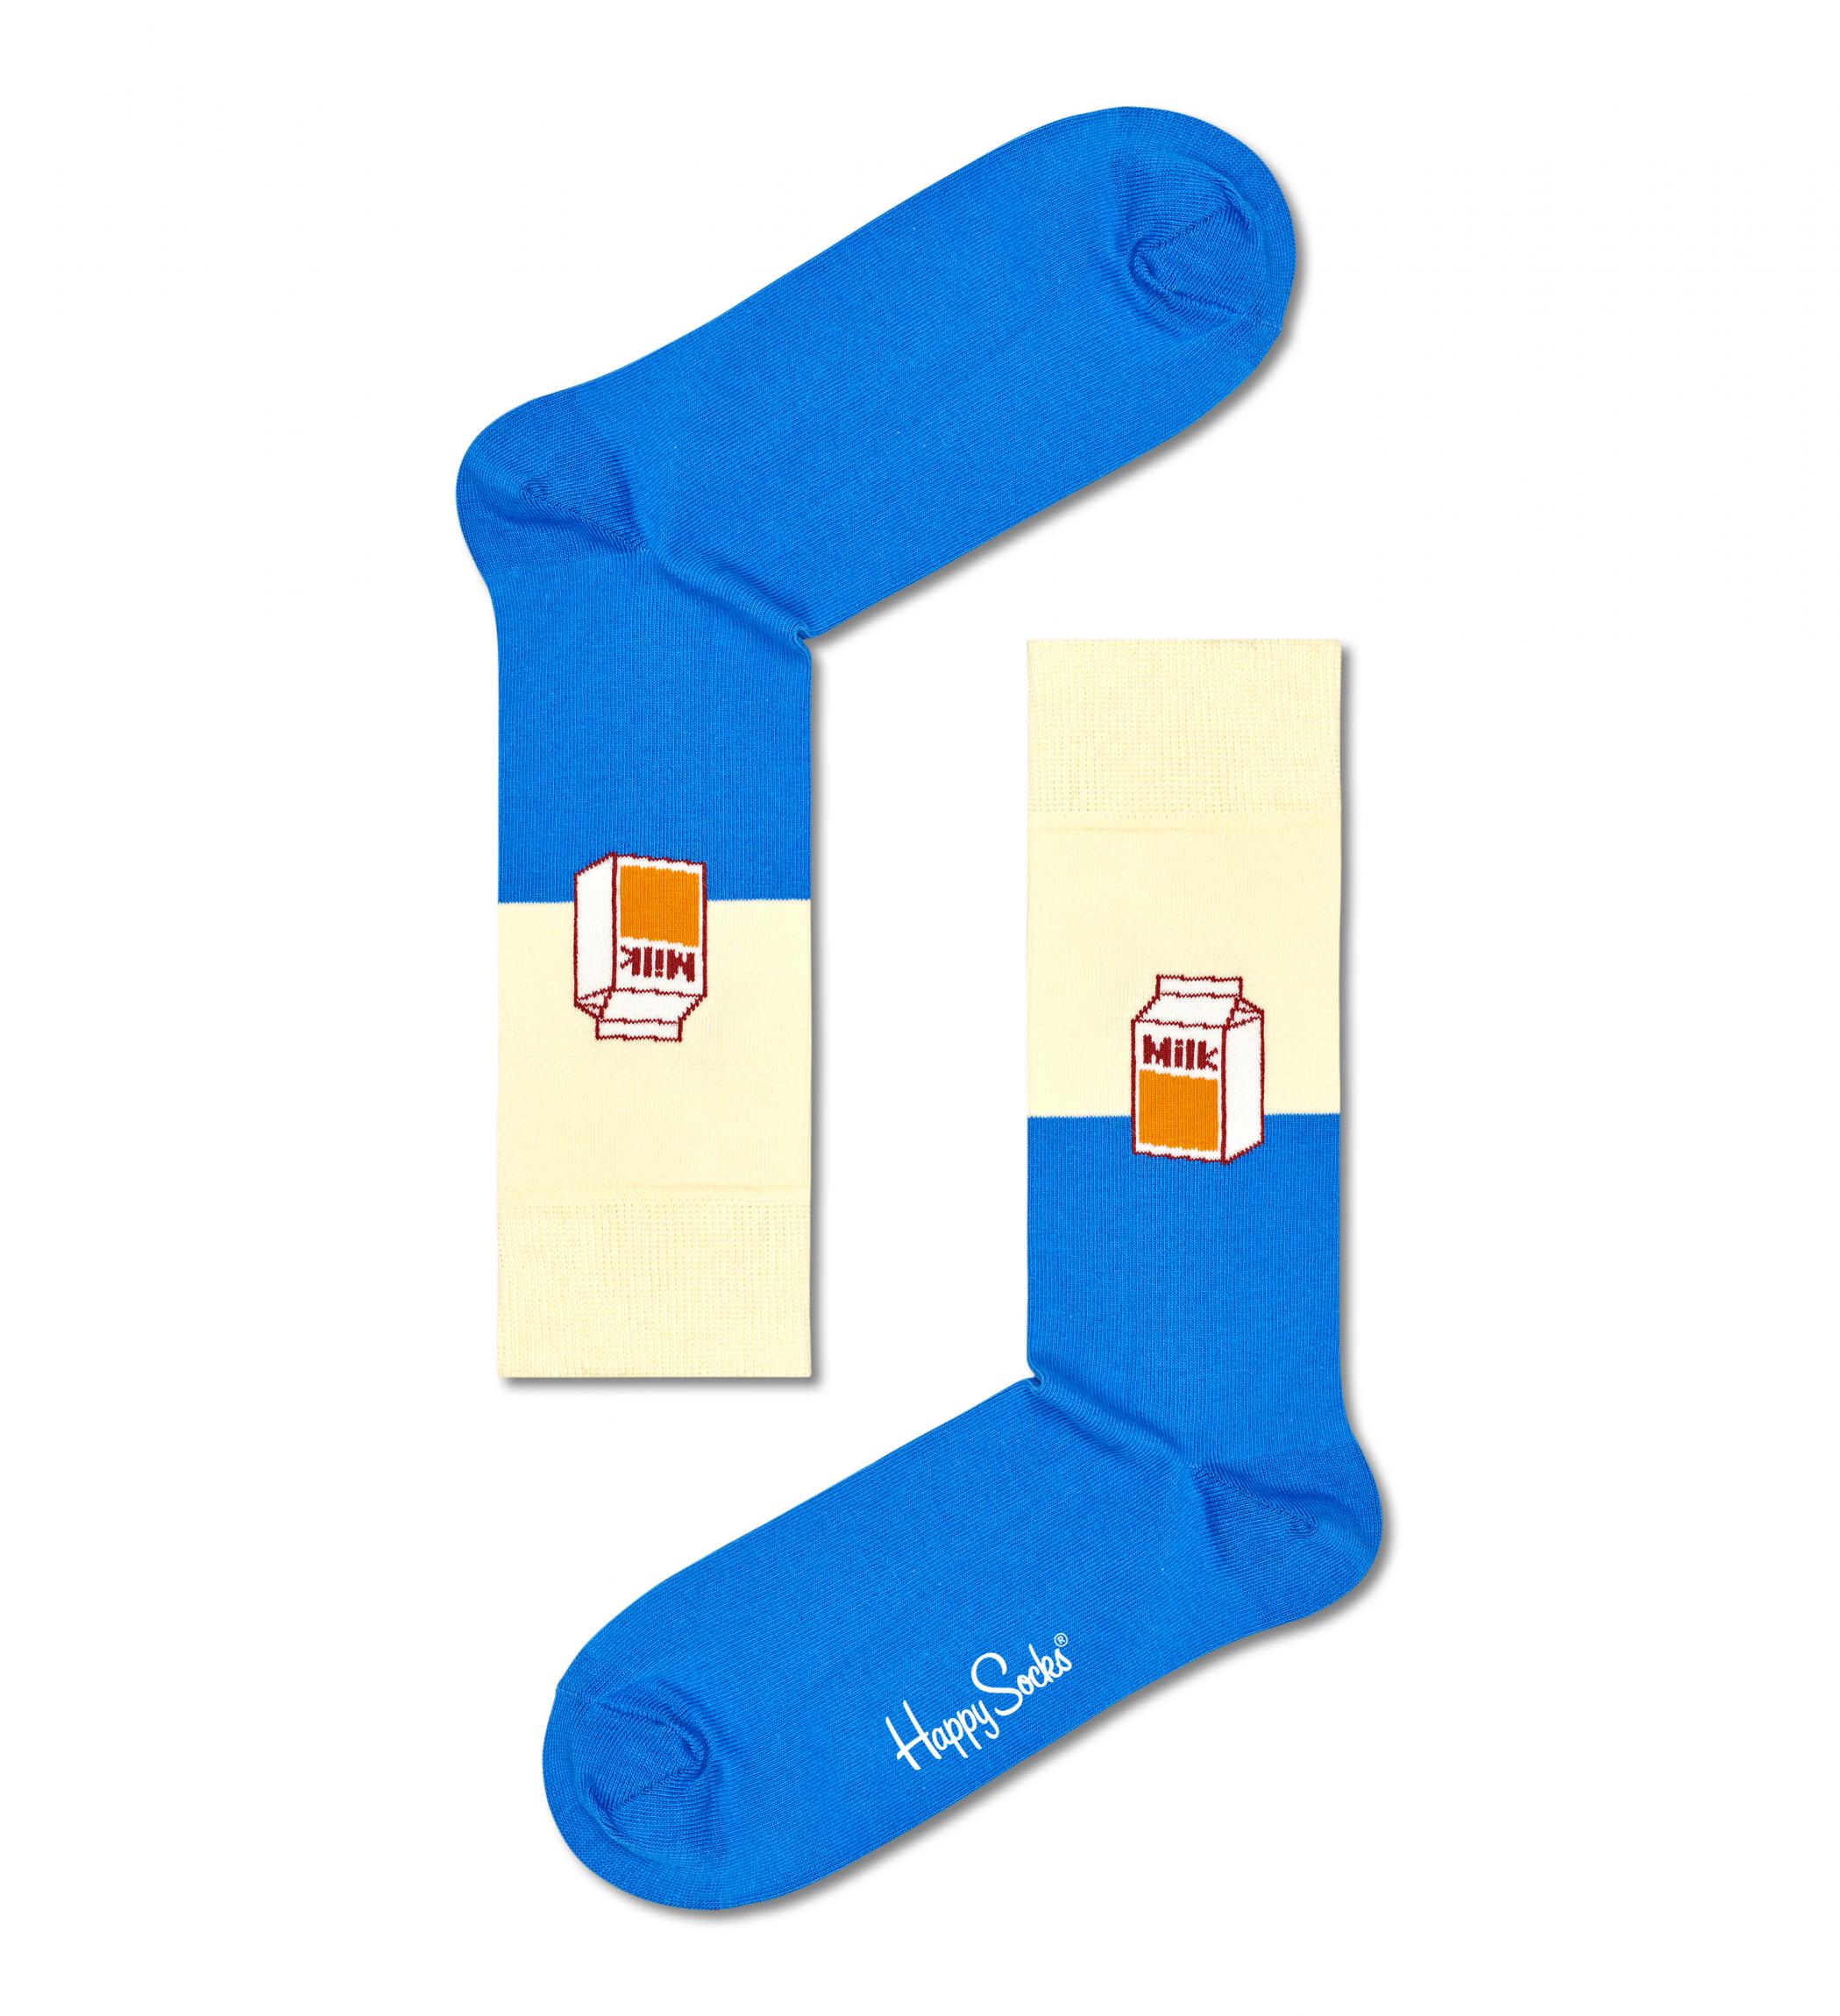 Modro-biele ponožky Happy Socks s krabicou mlieka, vzor Milk